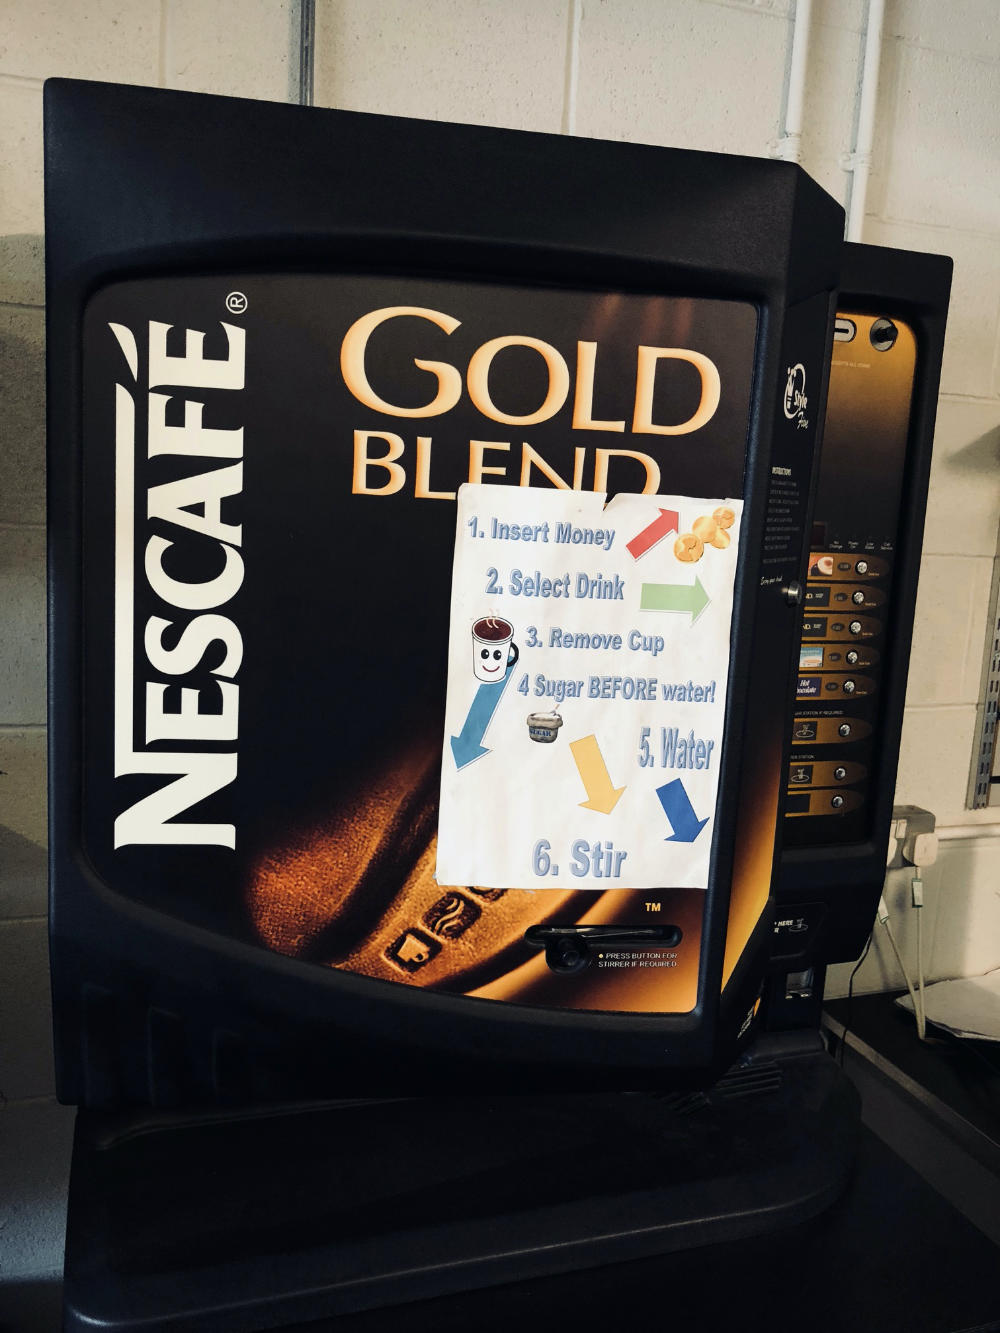 Coffee machine with garish instruction taped on